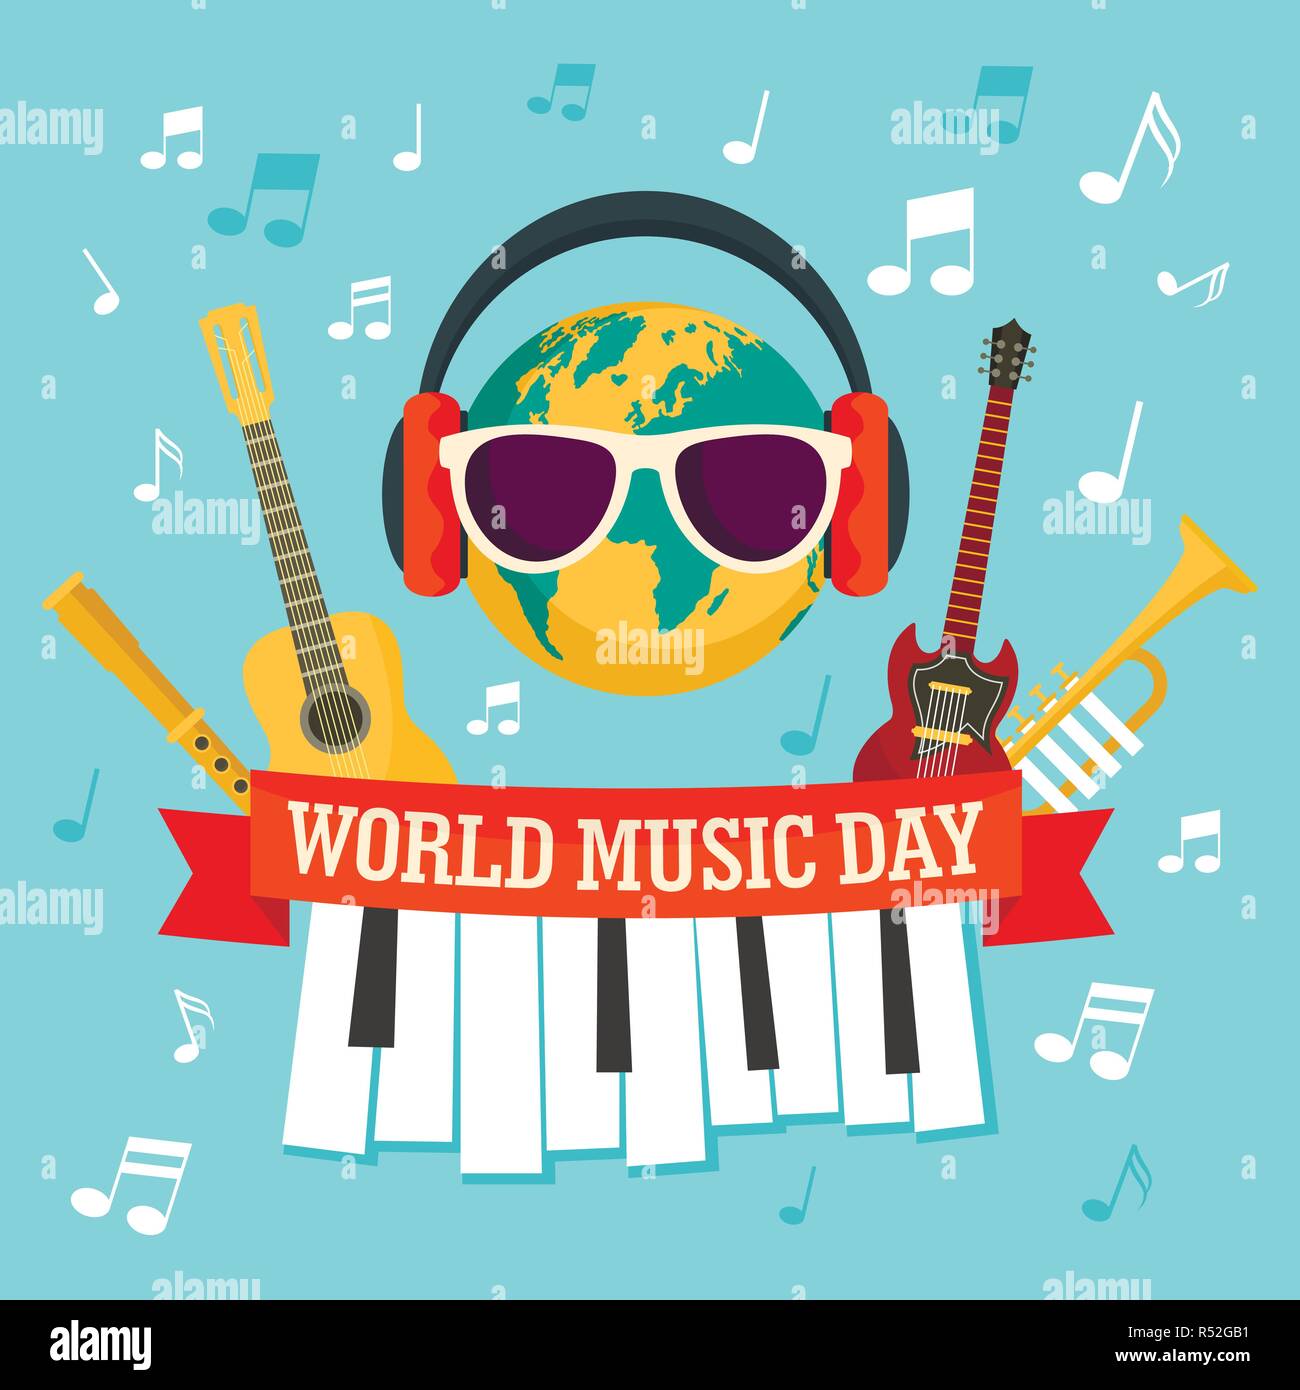 World music day concept background. Flat illustration of world music